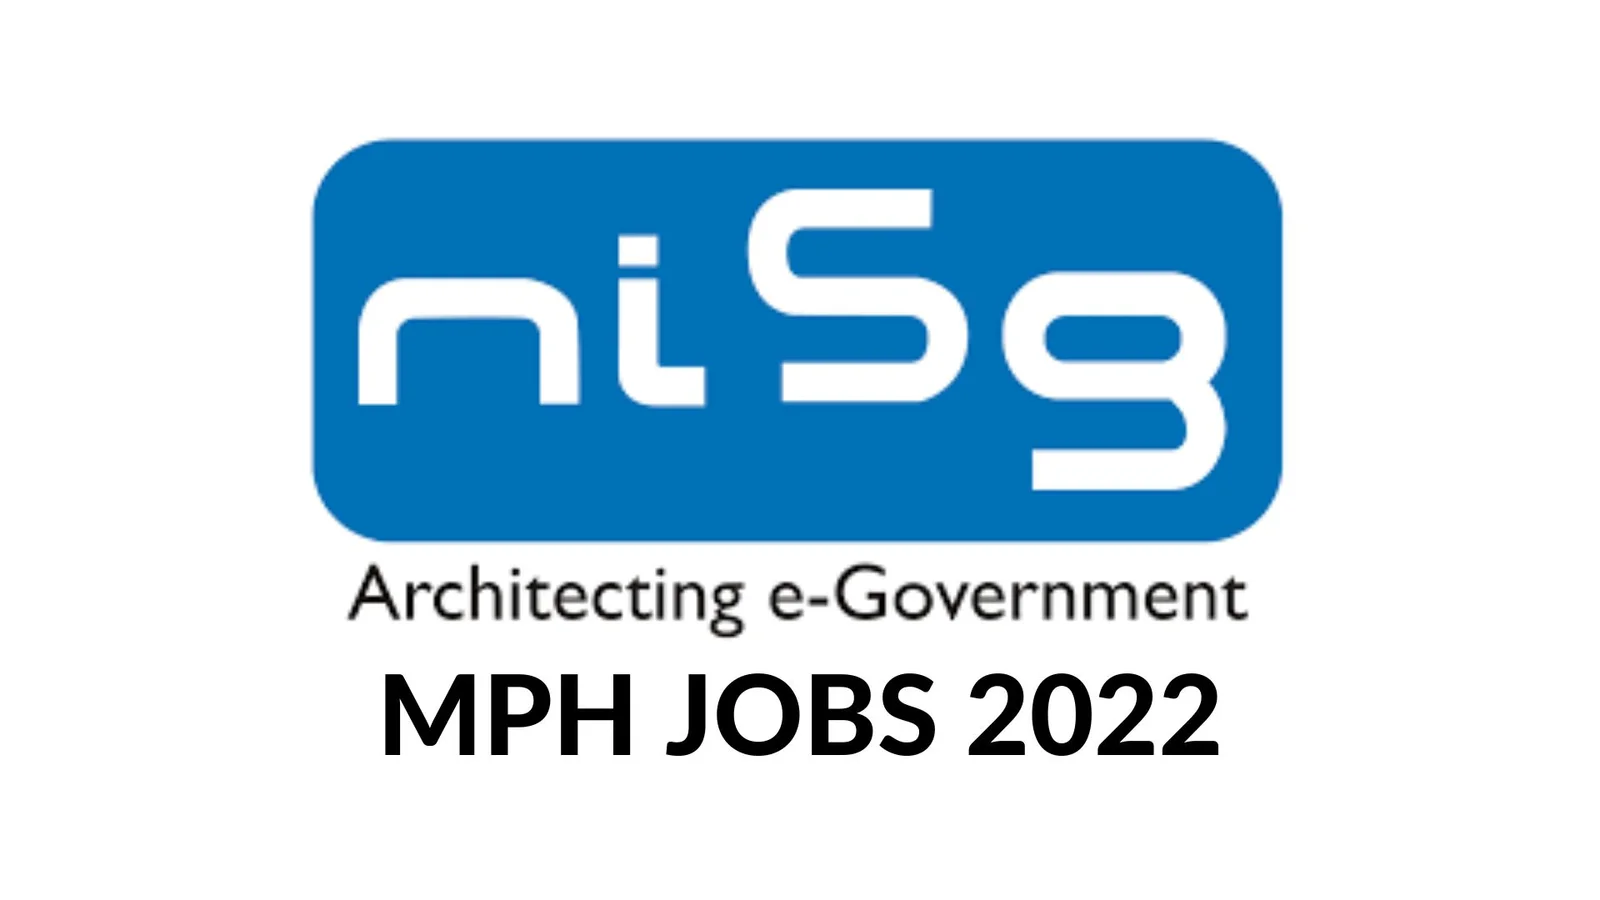 MPH JOBS 2022